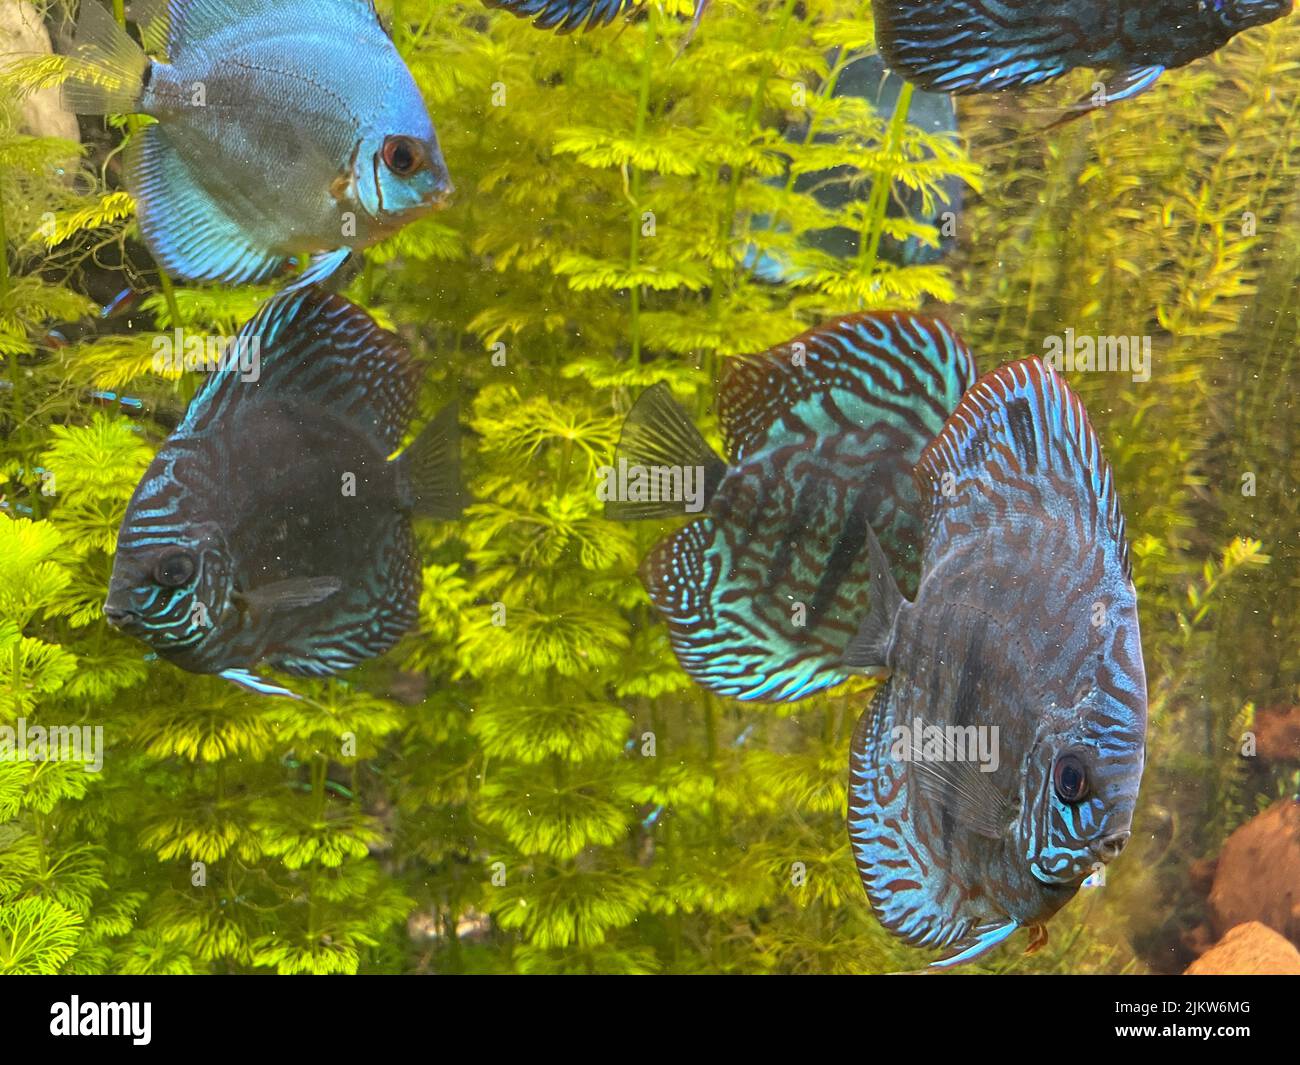 A closeup shot of Discus fishes swimming in an aquarium Stock Photo